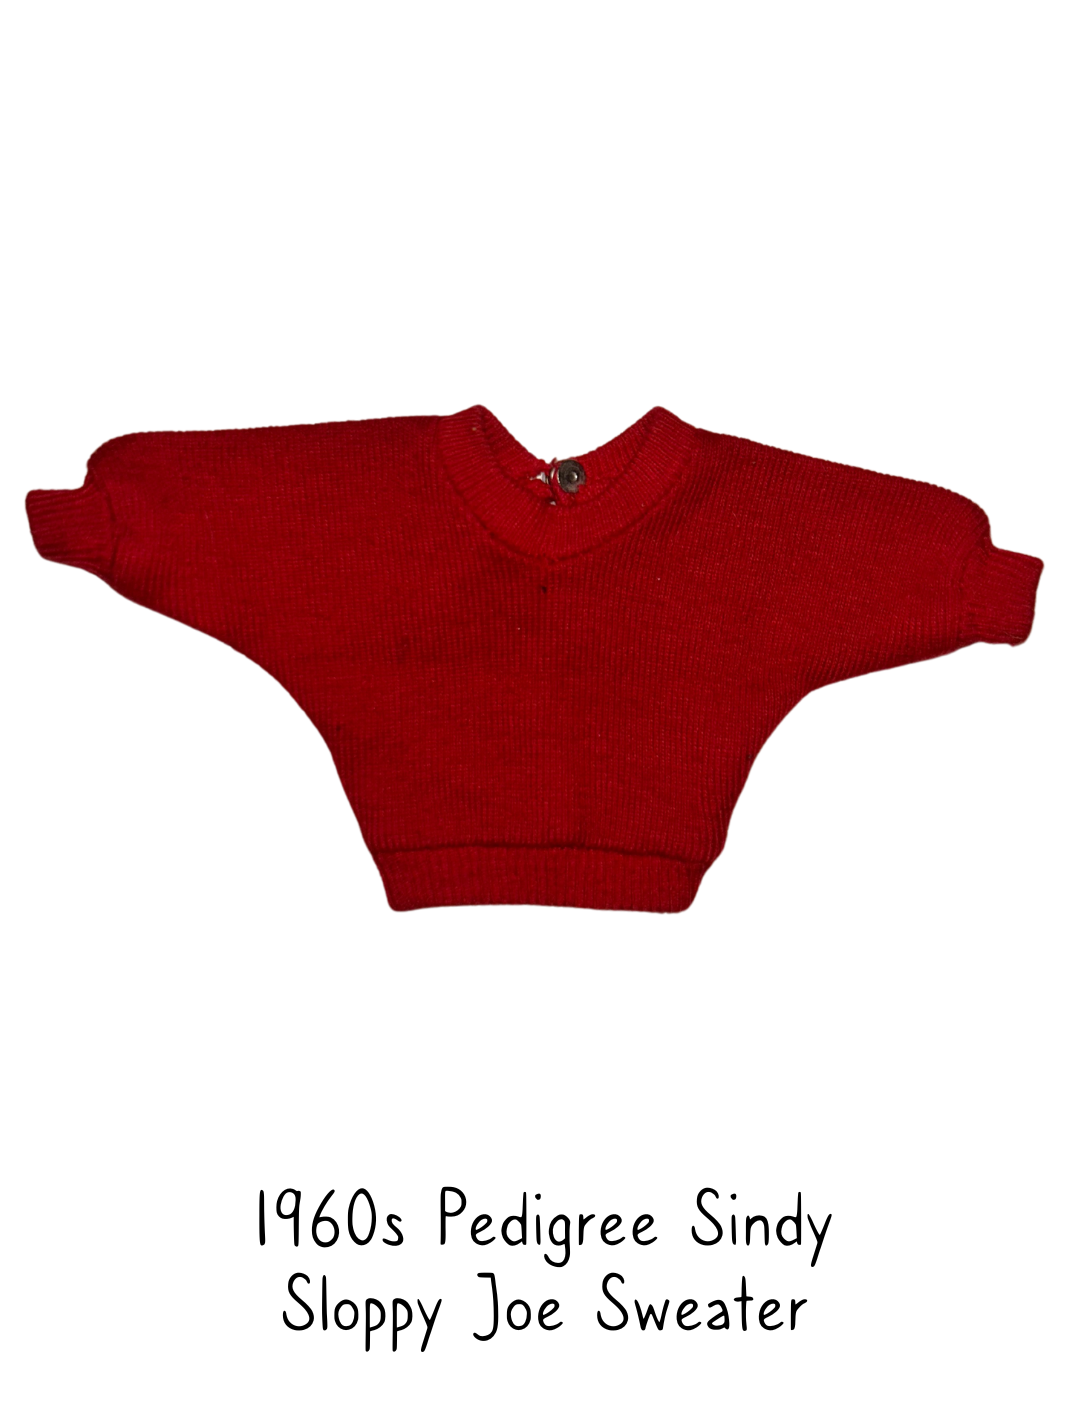 1960s Pedigree Sindy Fashion Doll Sloppy Joe Sweater